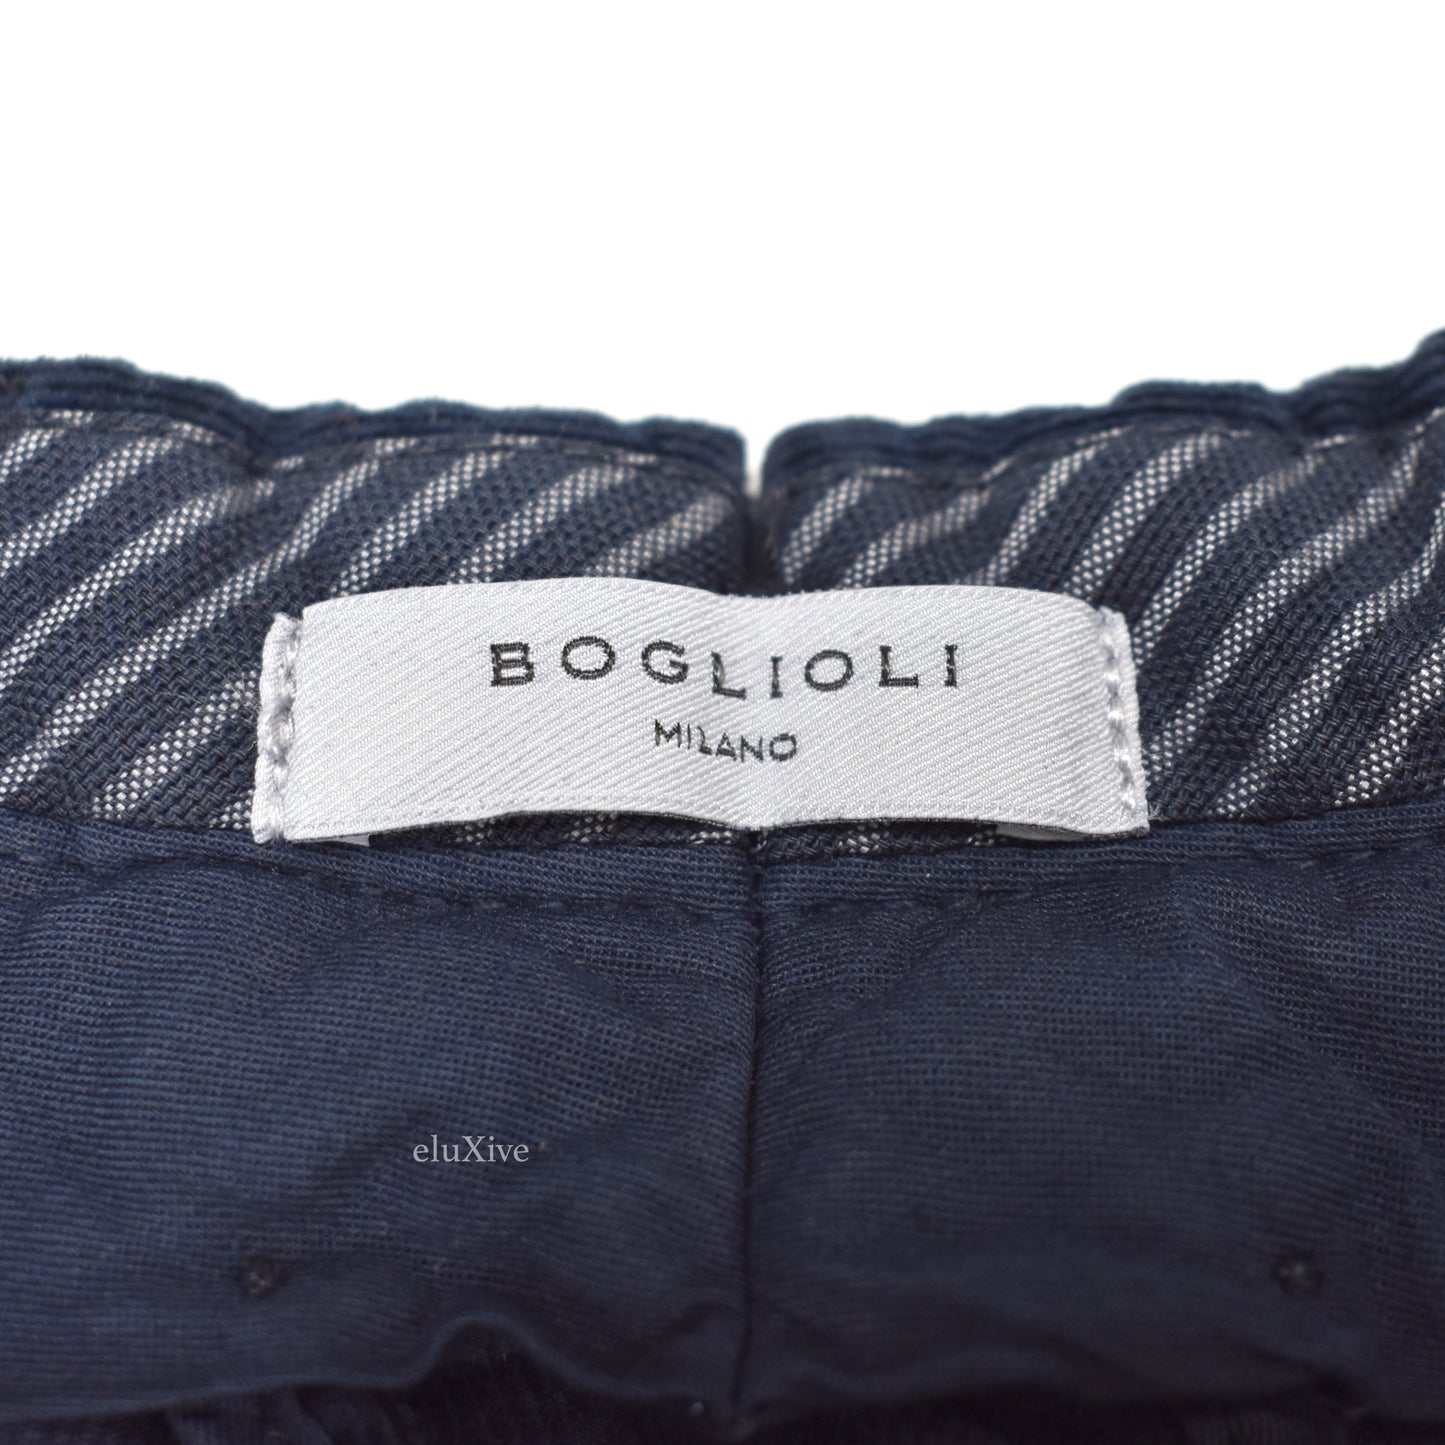 Boglioli - Navy Blue Corduroy Pants